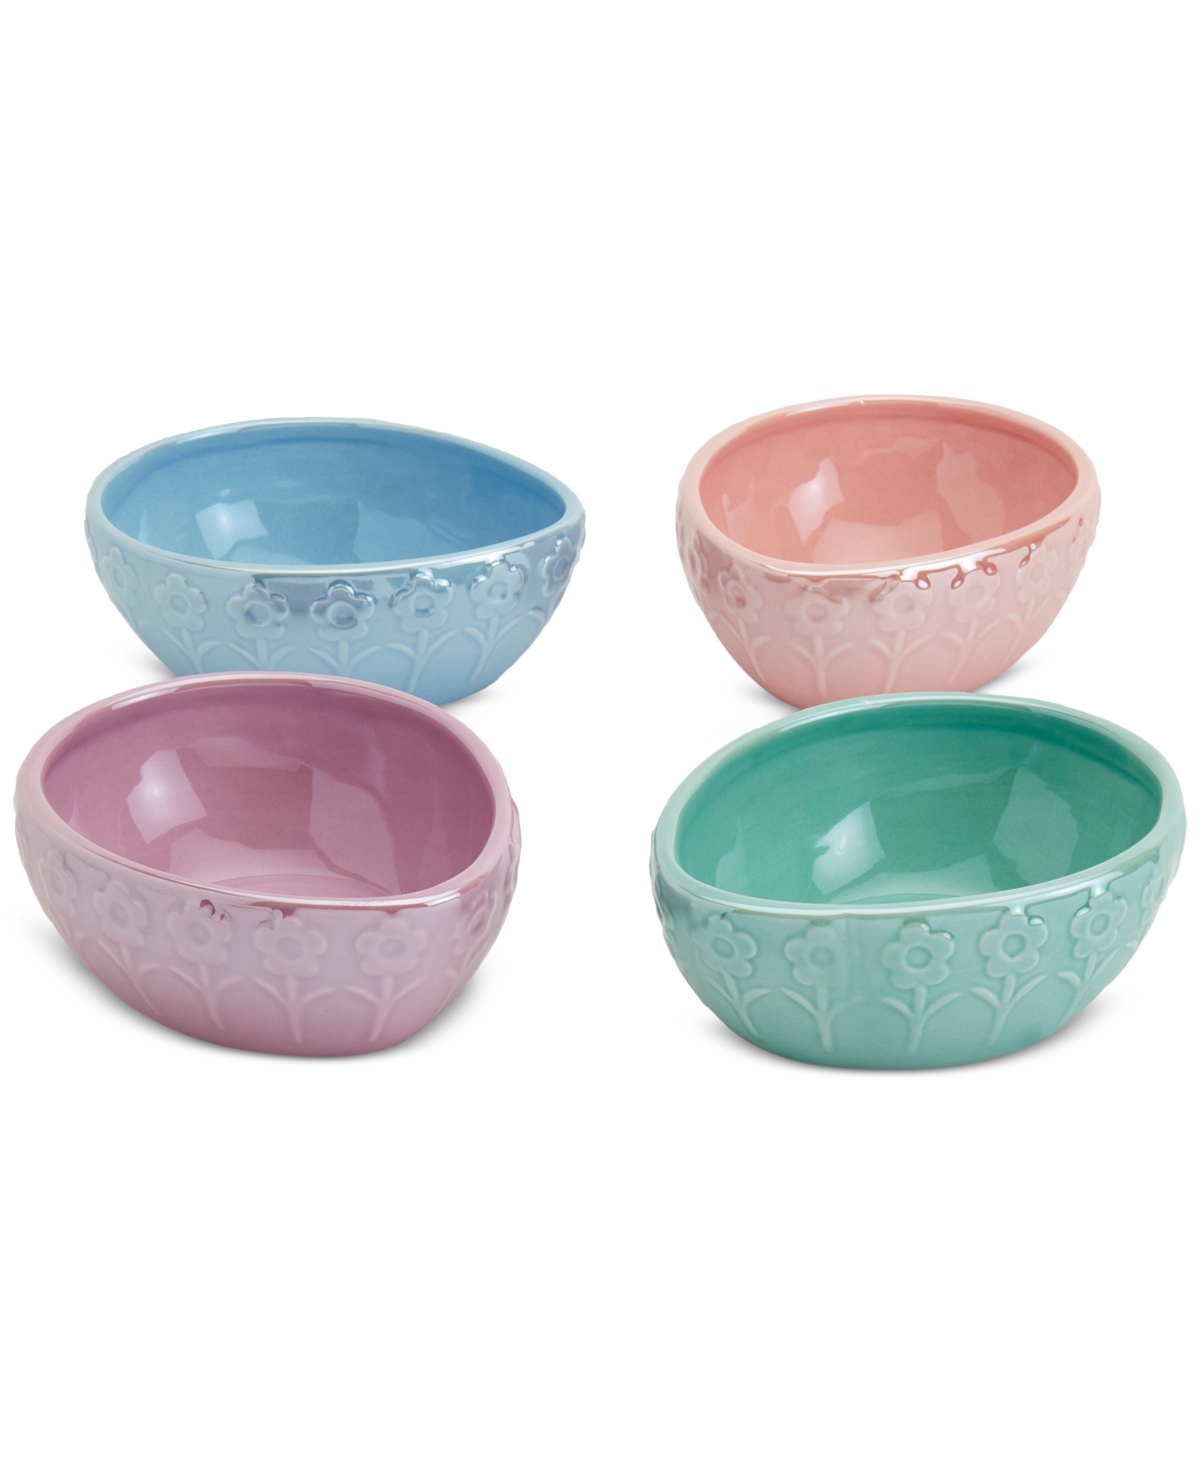 Iridescent Figural Egg Bowls, Set of 4 - Multi Clr